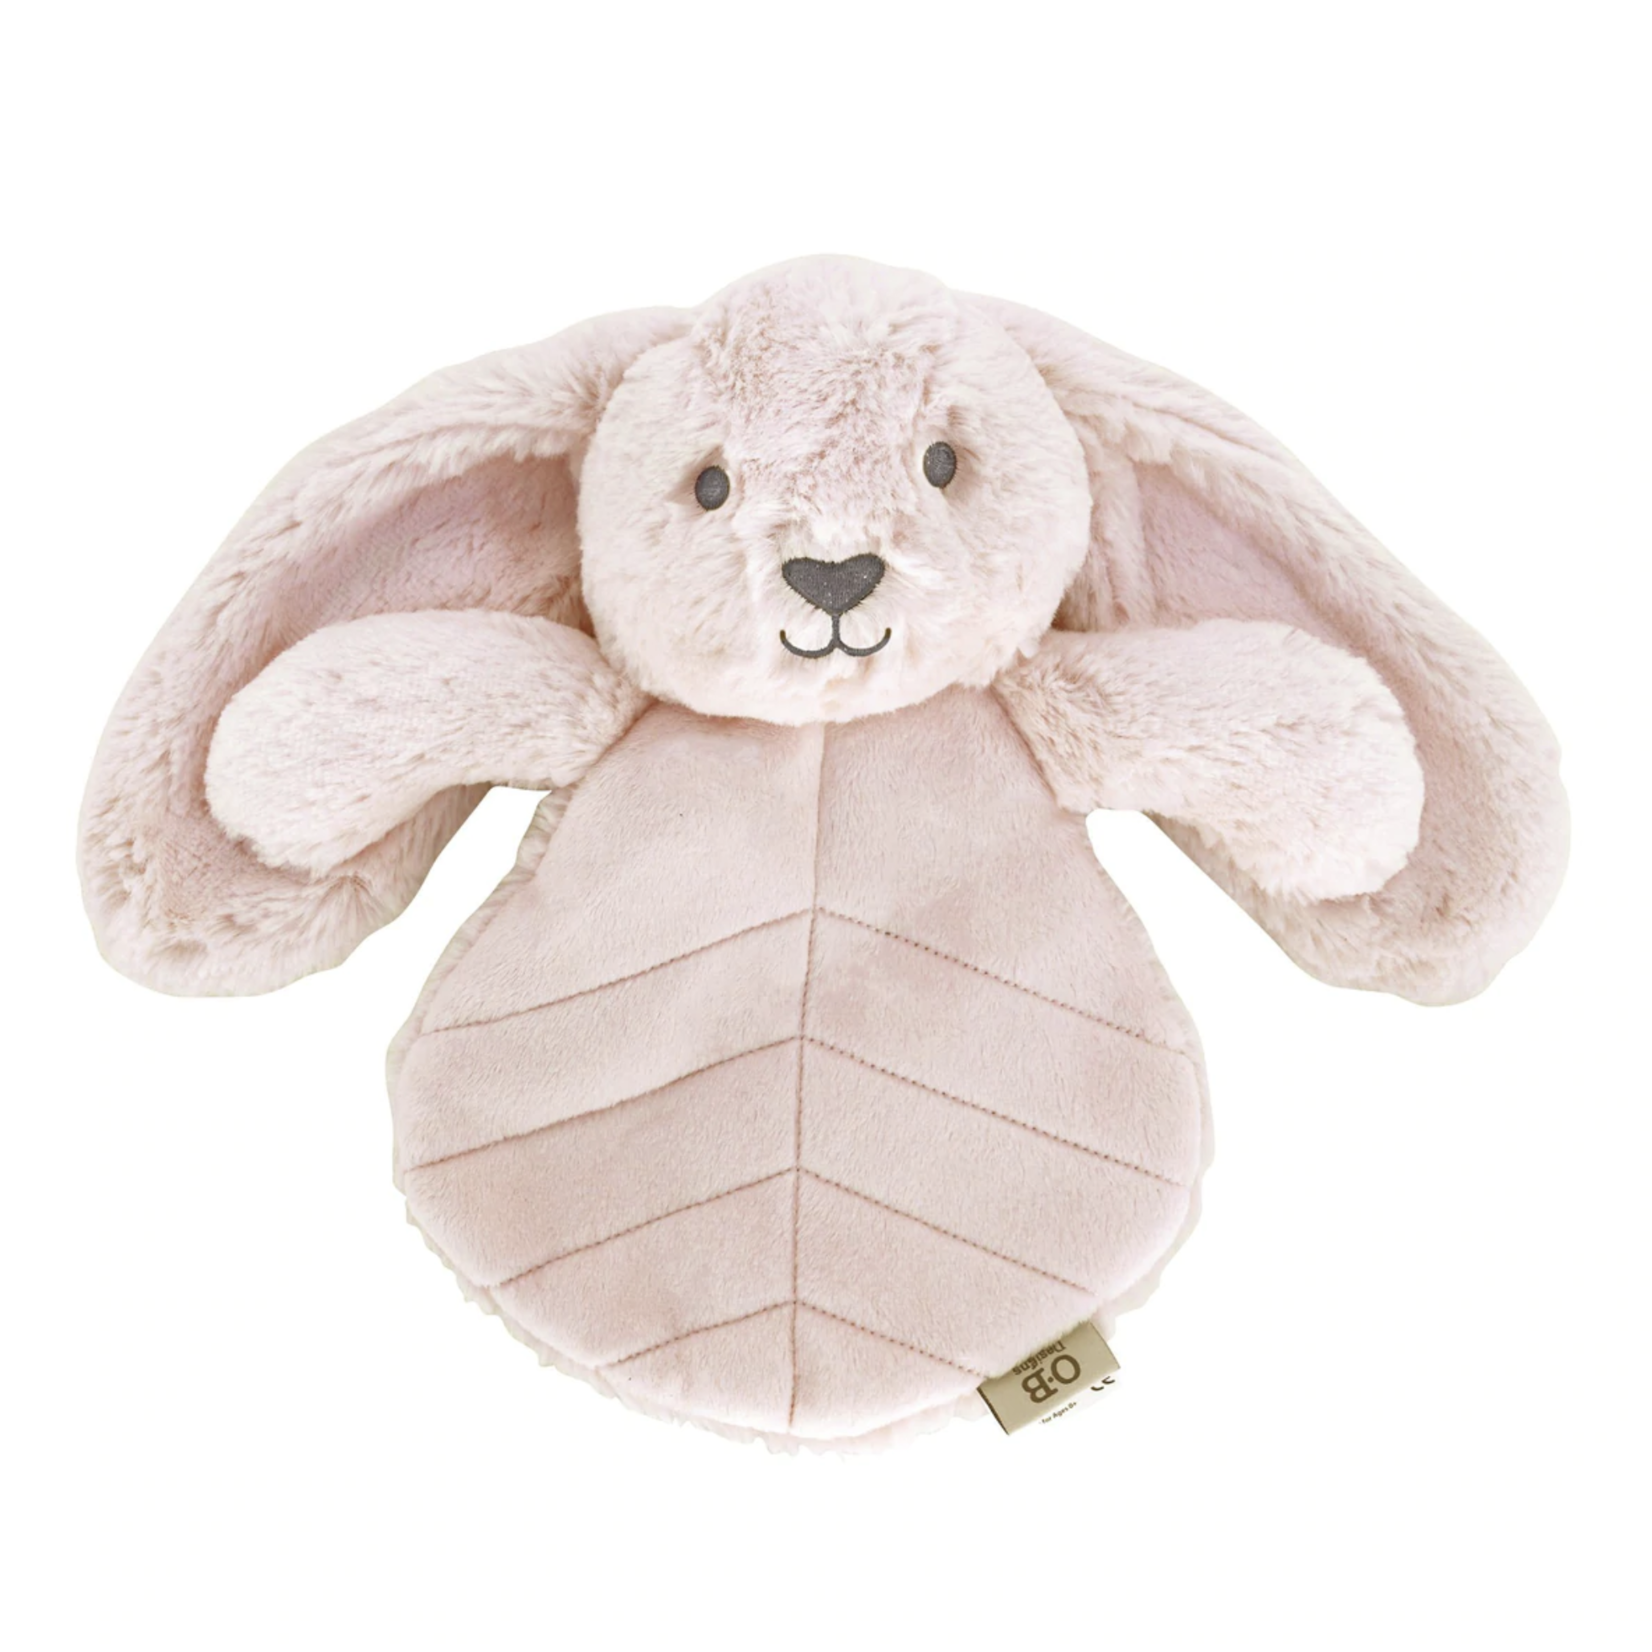 OB Designs Baby Comforter-Betsy Bunny